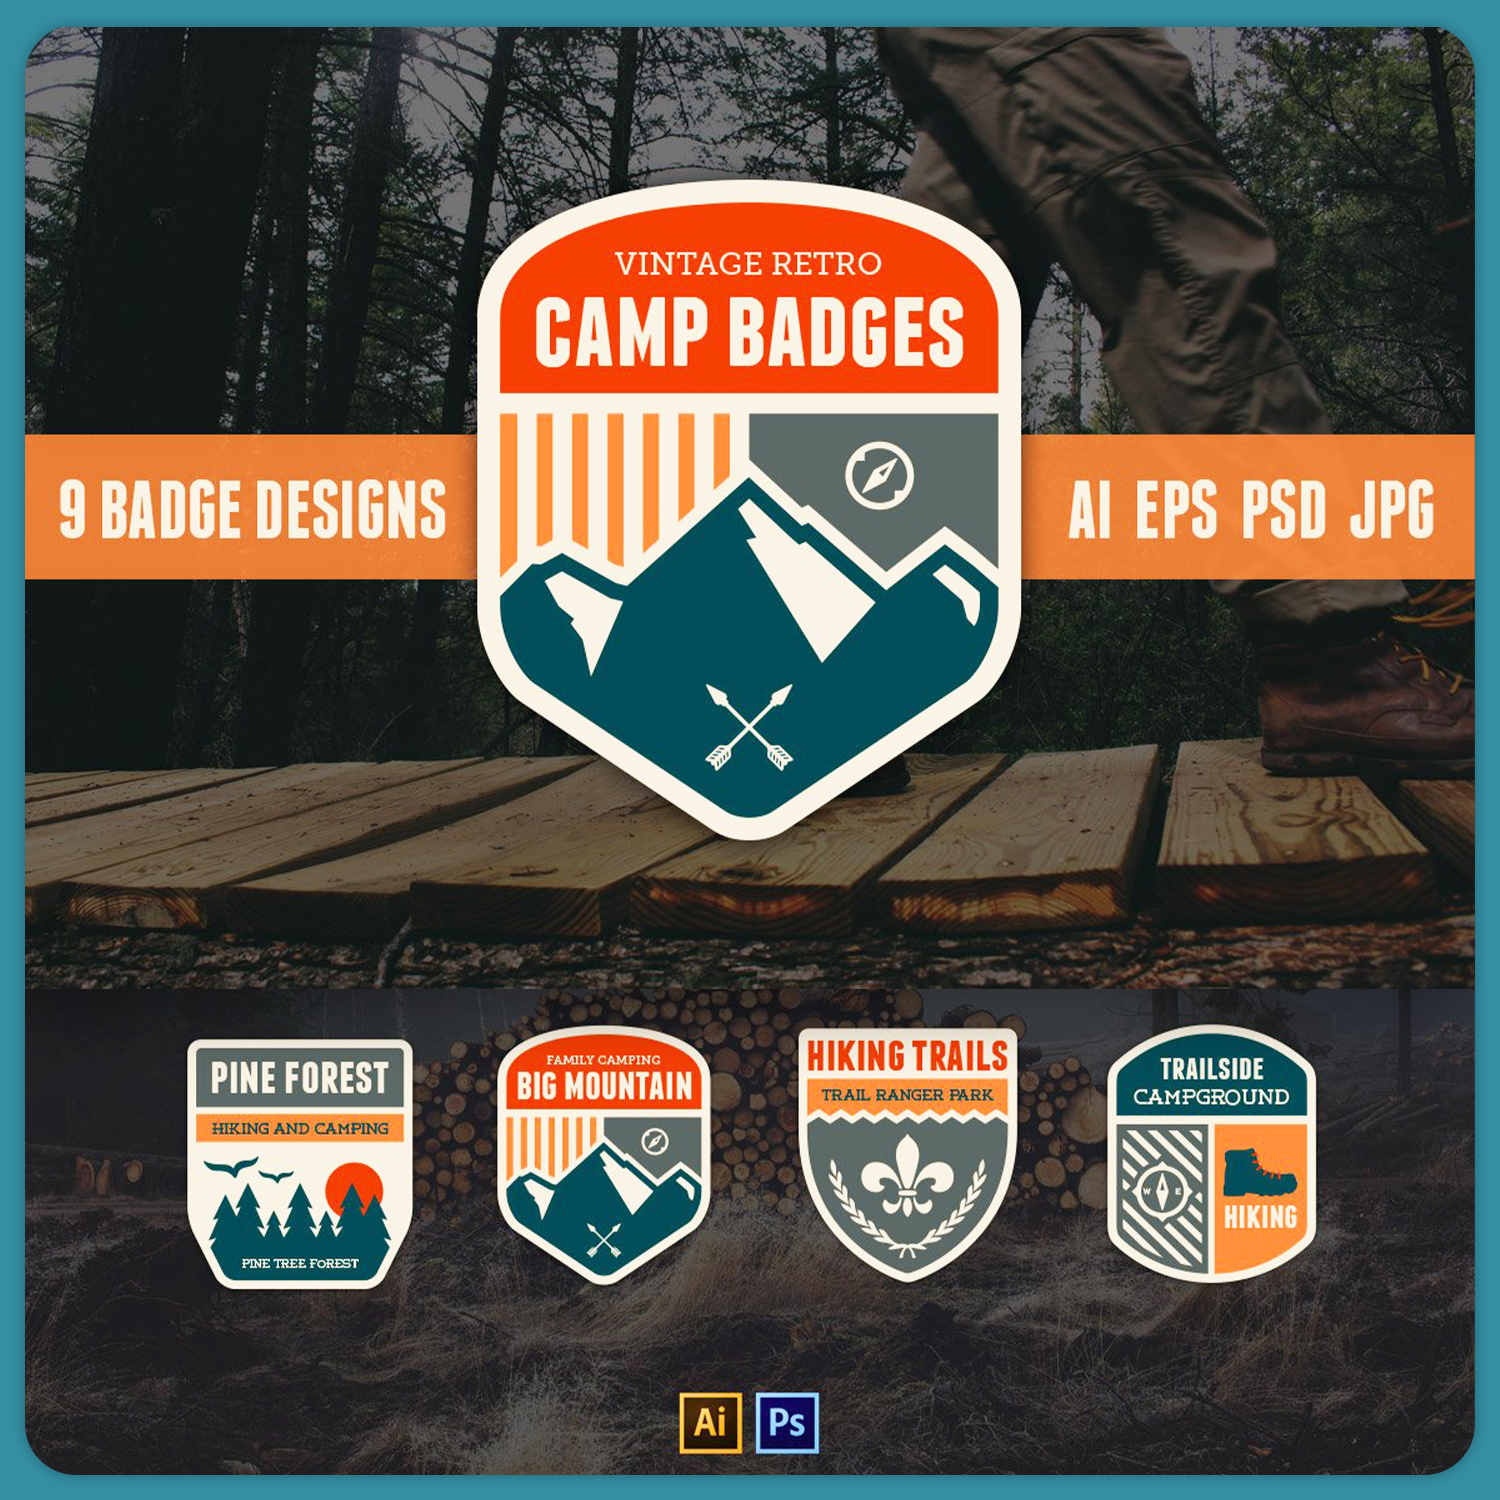 Retro Camp Badges preview image.